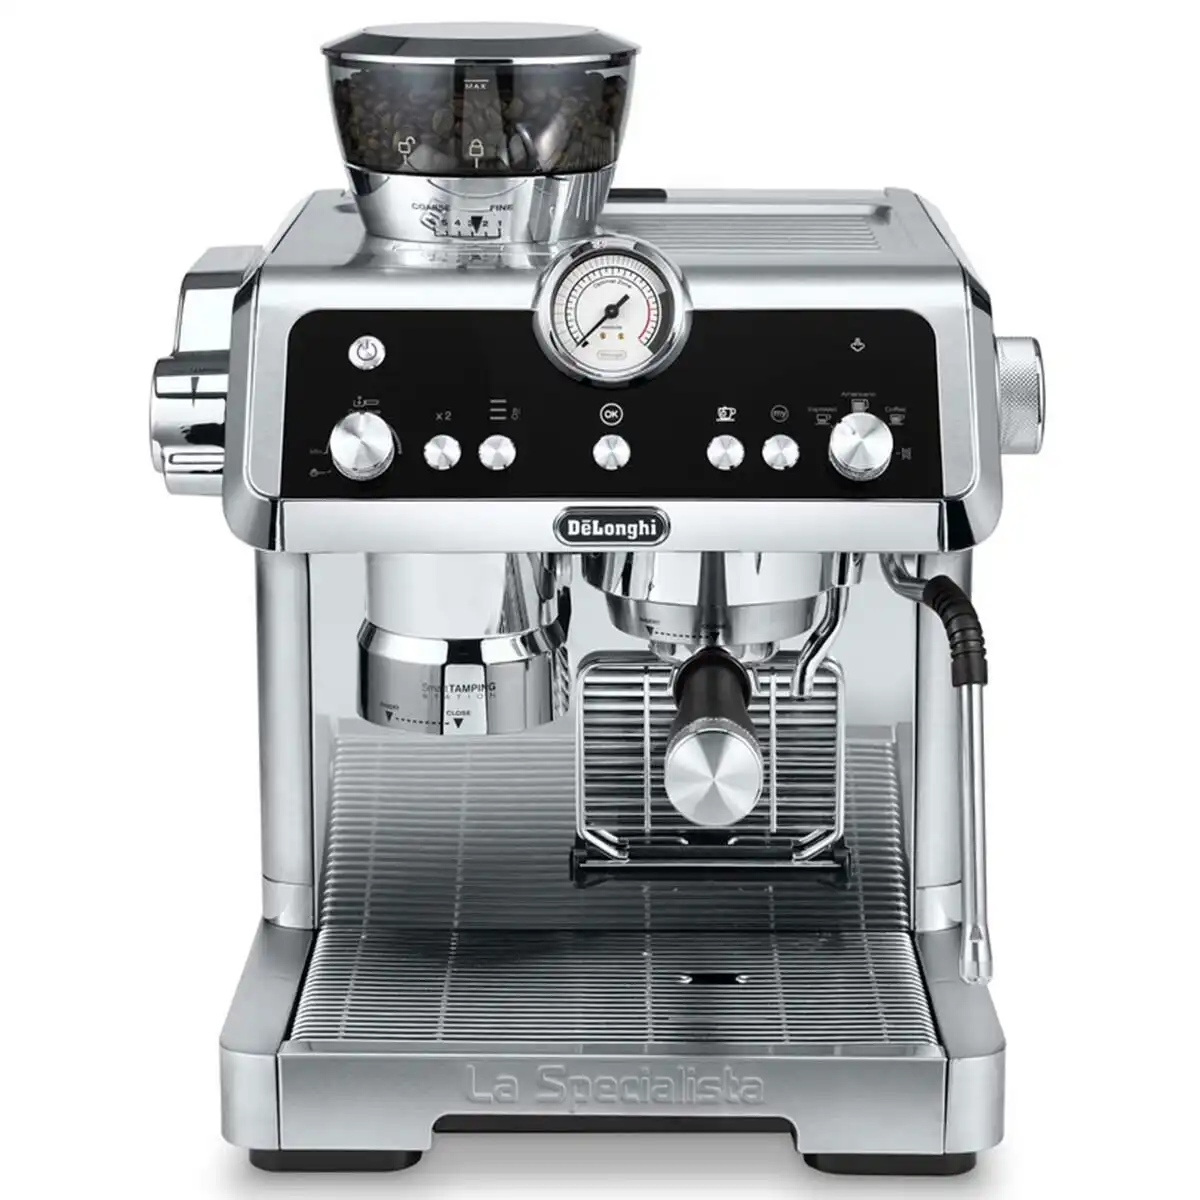 De'Longhi La Specialista Prestigio Manual Coffee Machine Stainless Steel